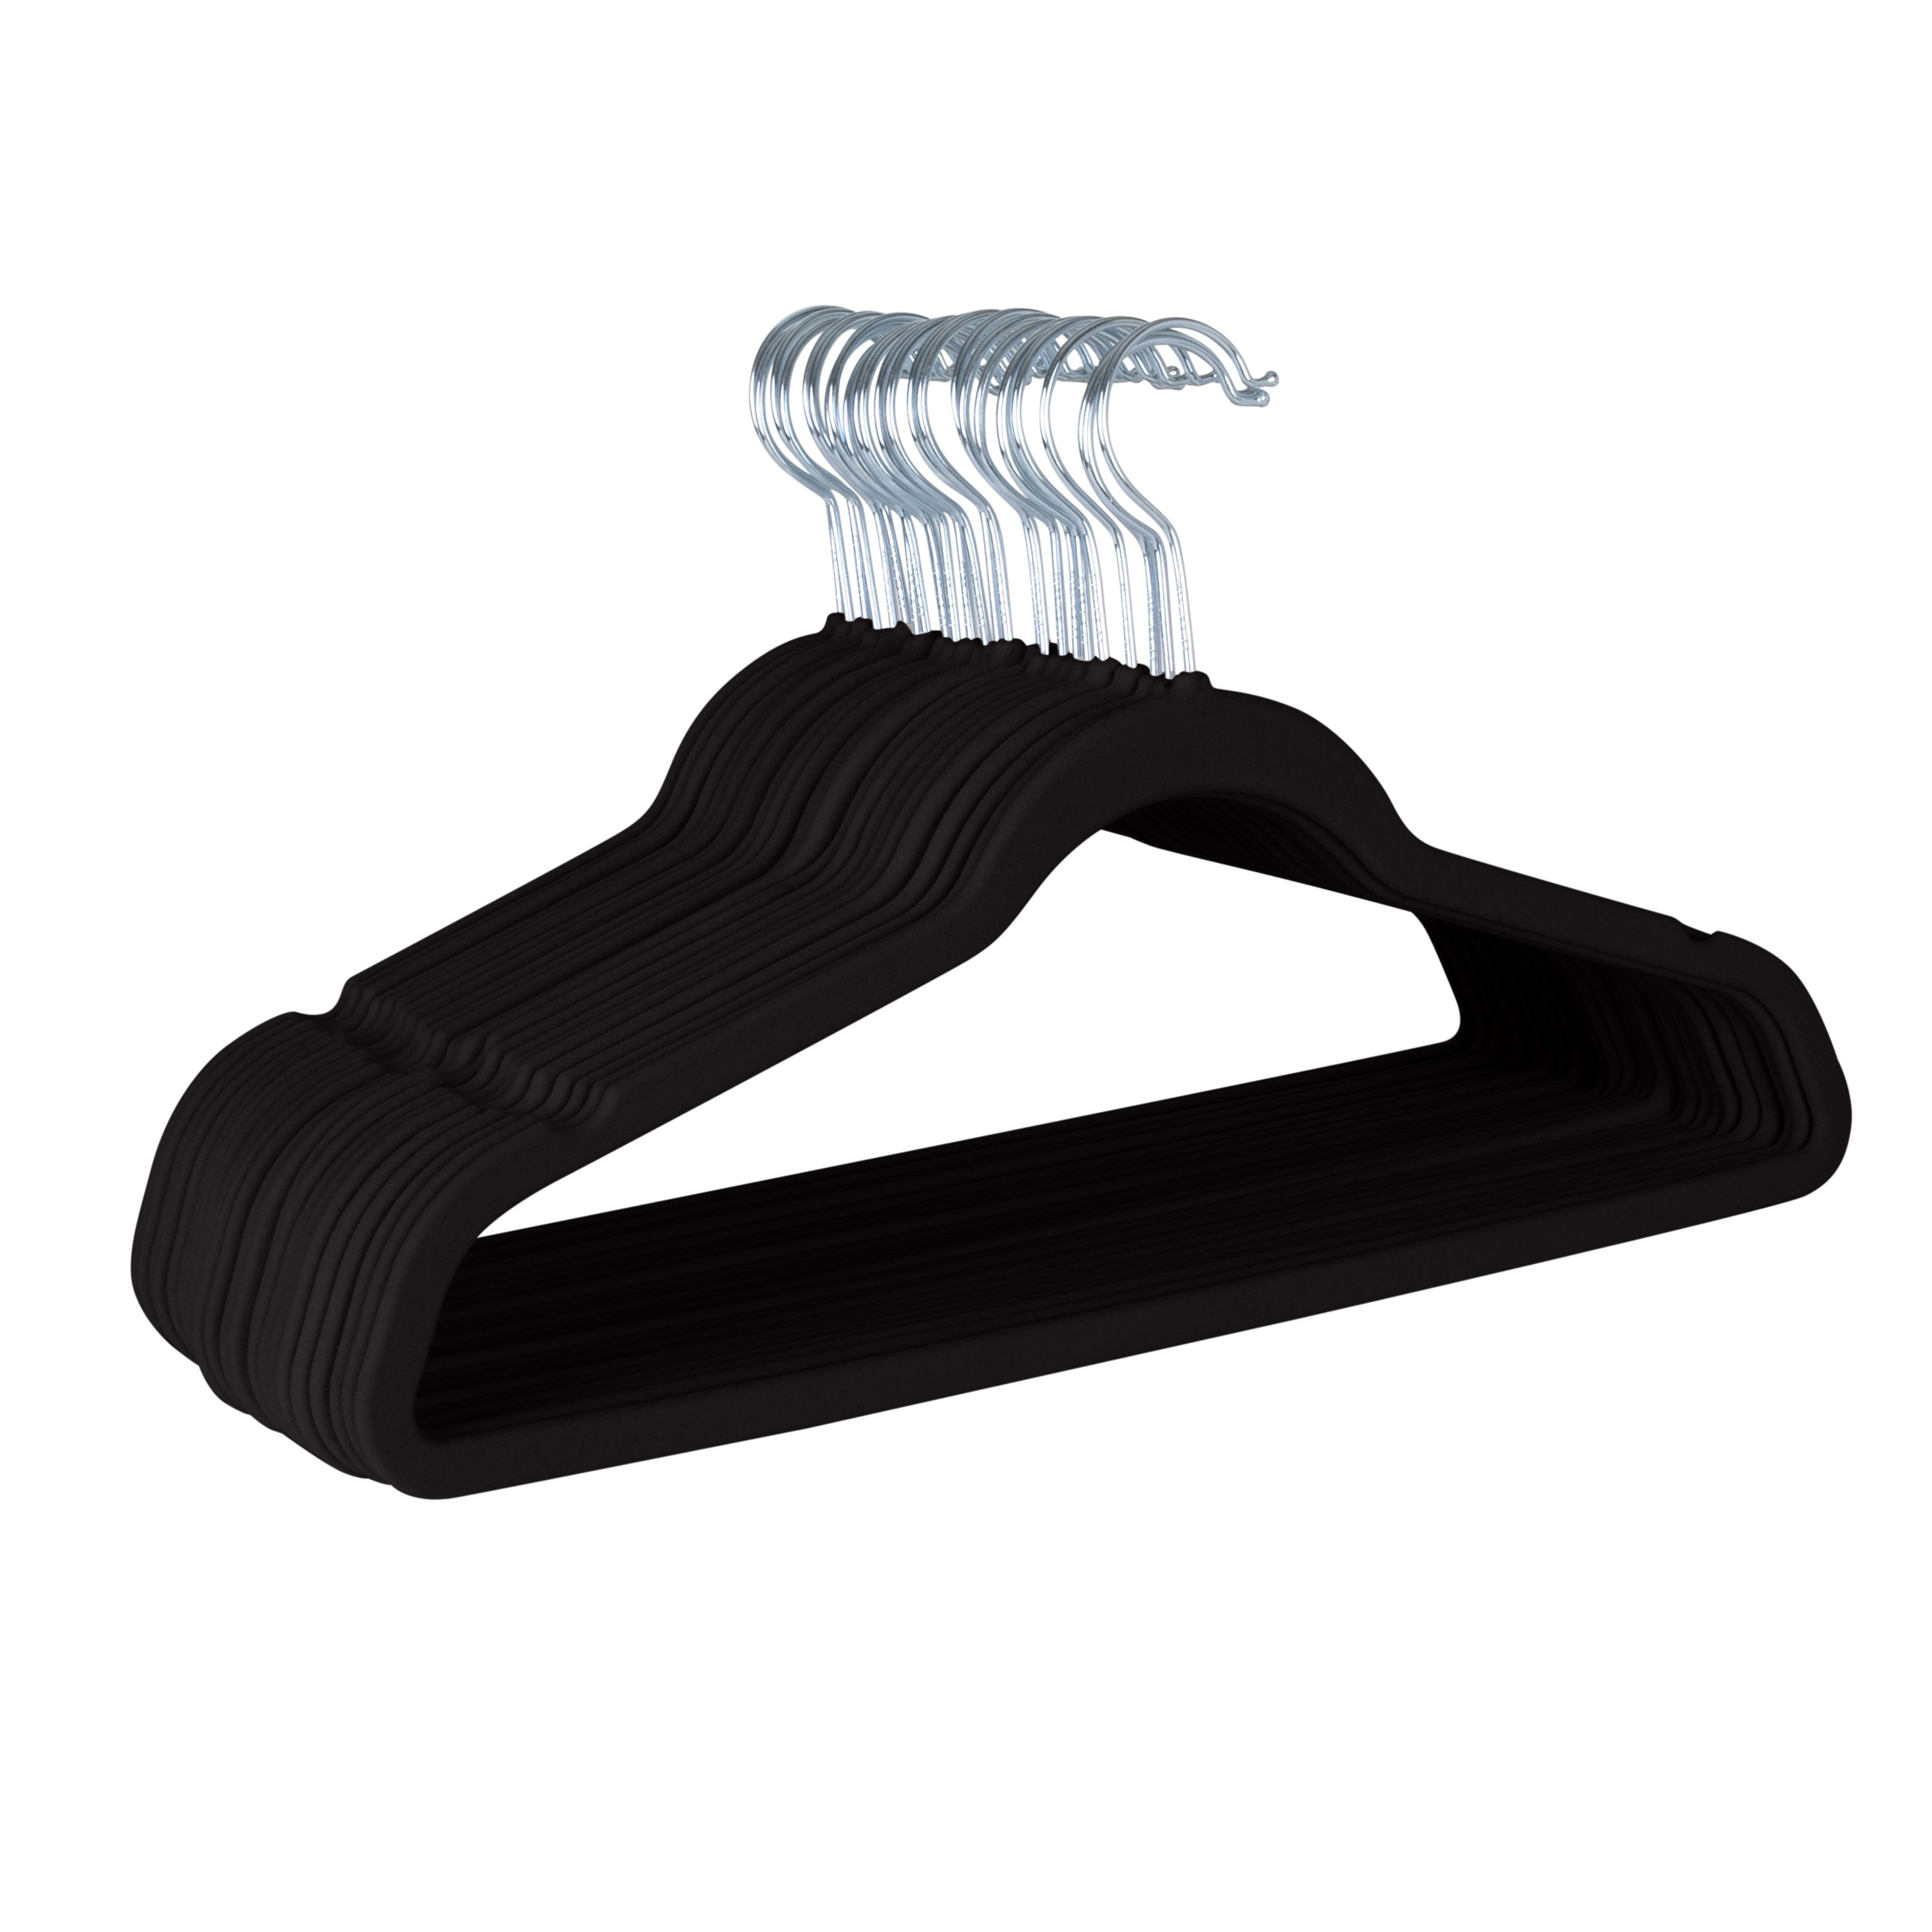 Slim Grip Clothing Hangers 10 Pack White & Teal Durable Plastic